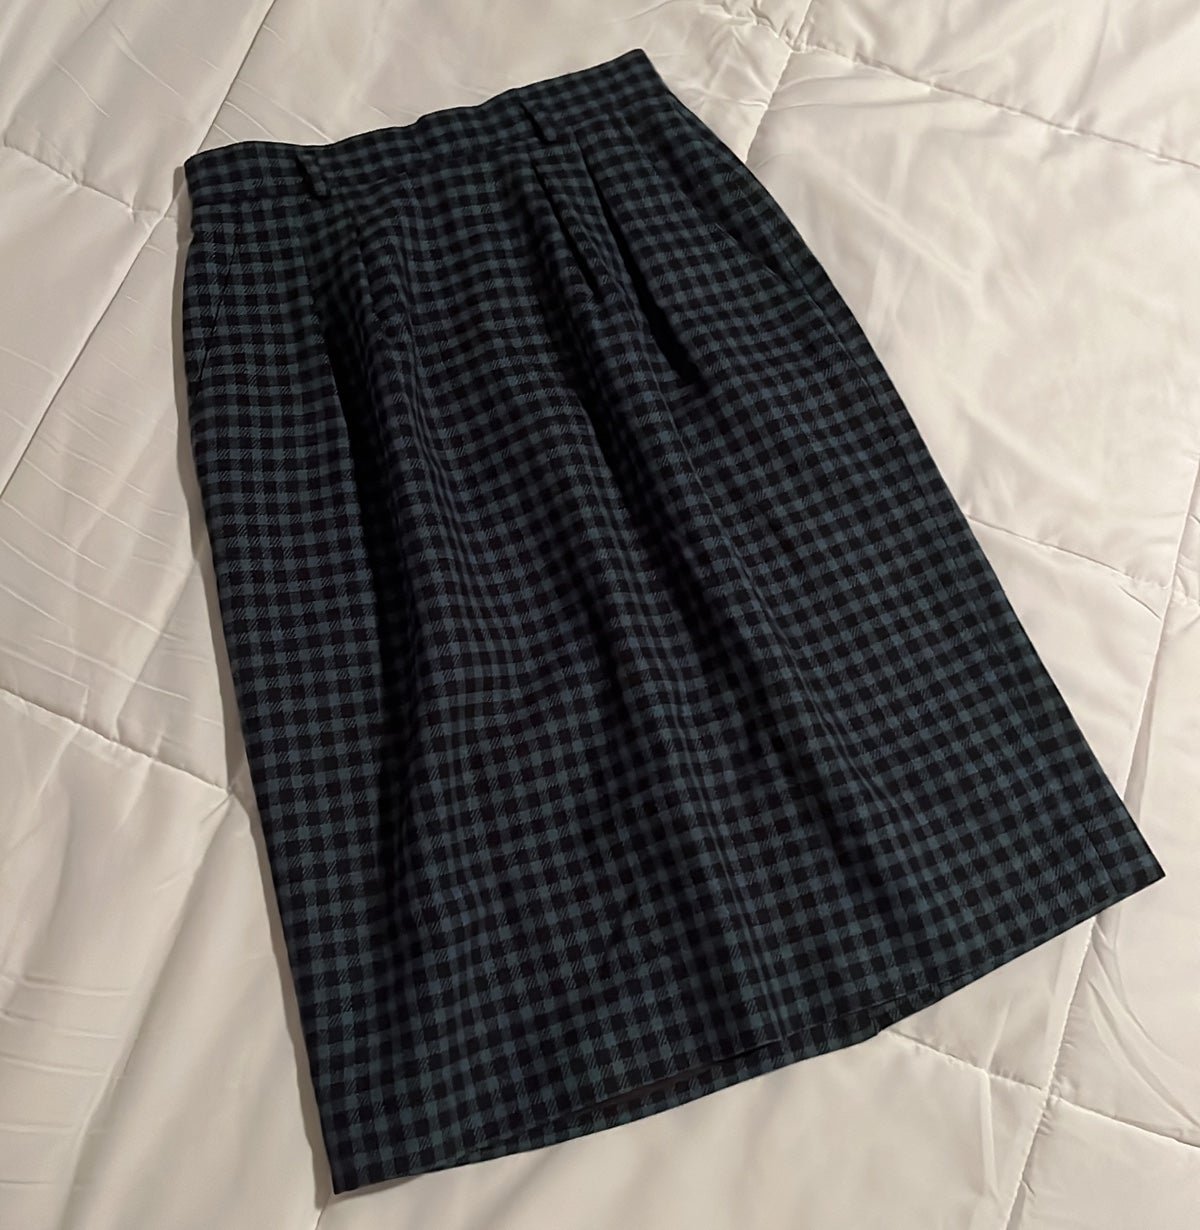 floor price Vintage Wool Skirt - Jones New York - Size 6P kNeK8eWtw best sale